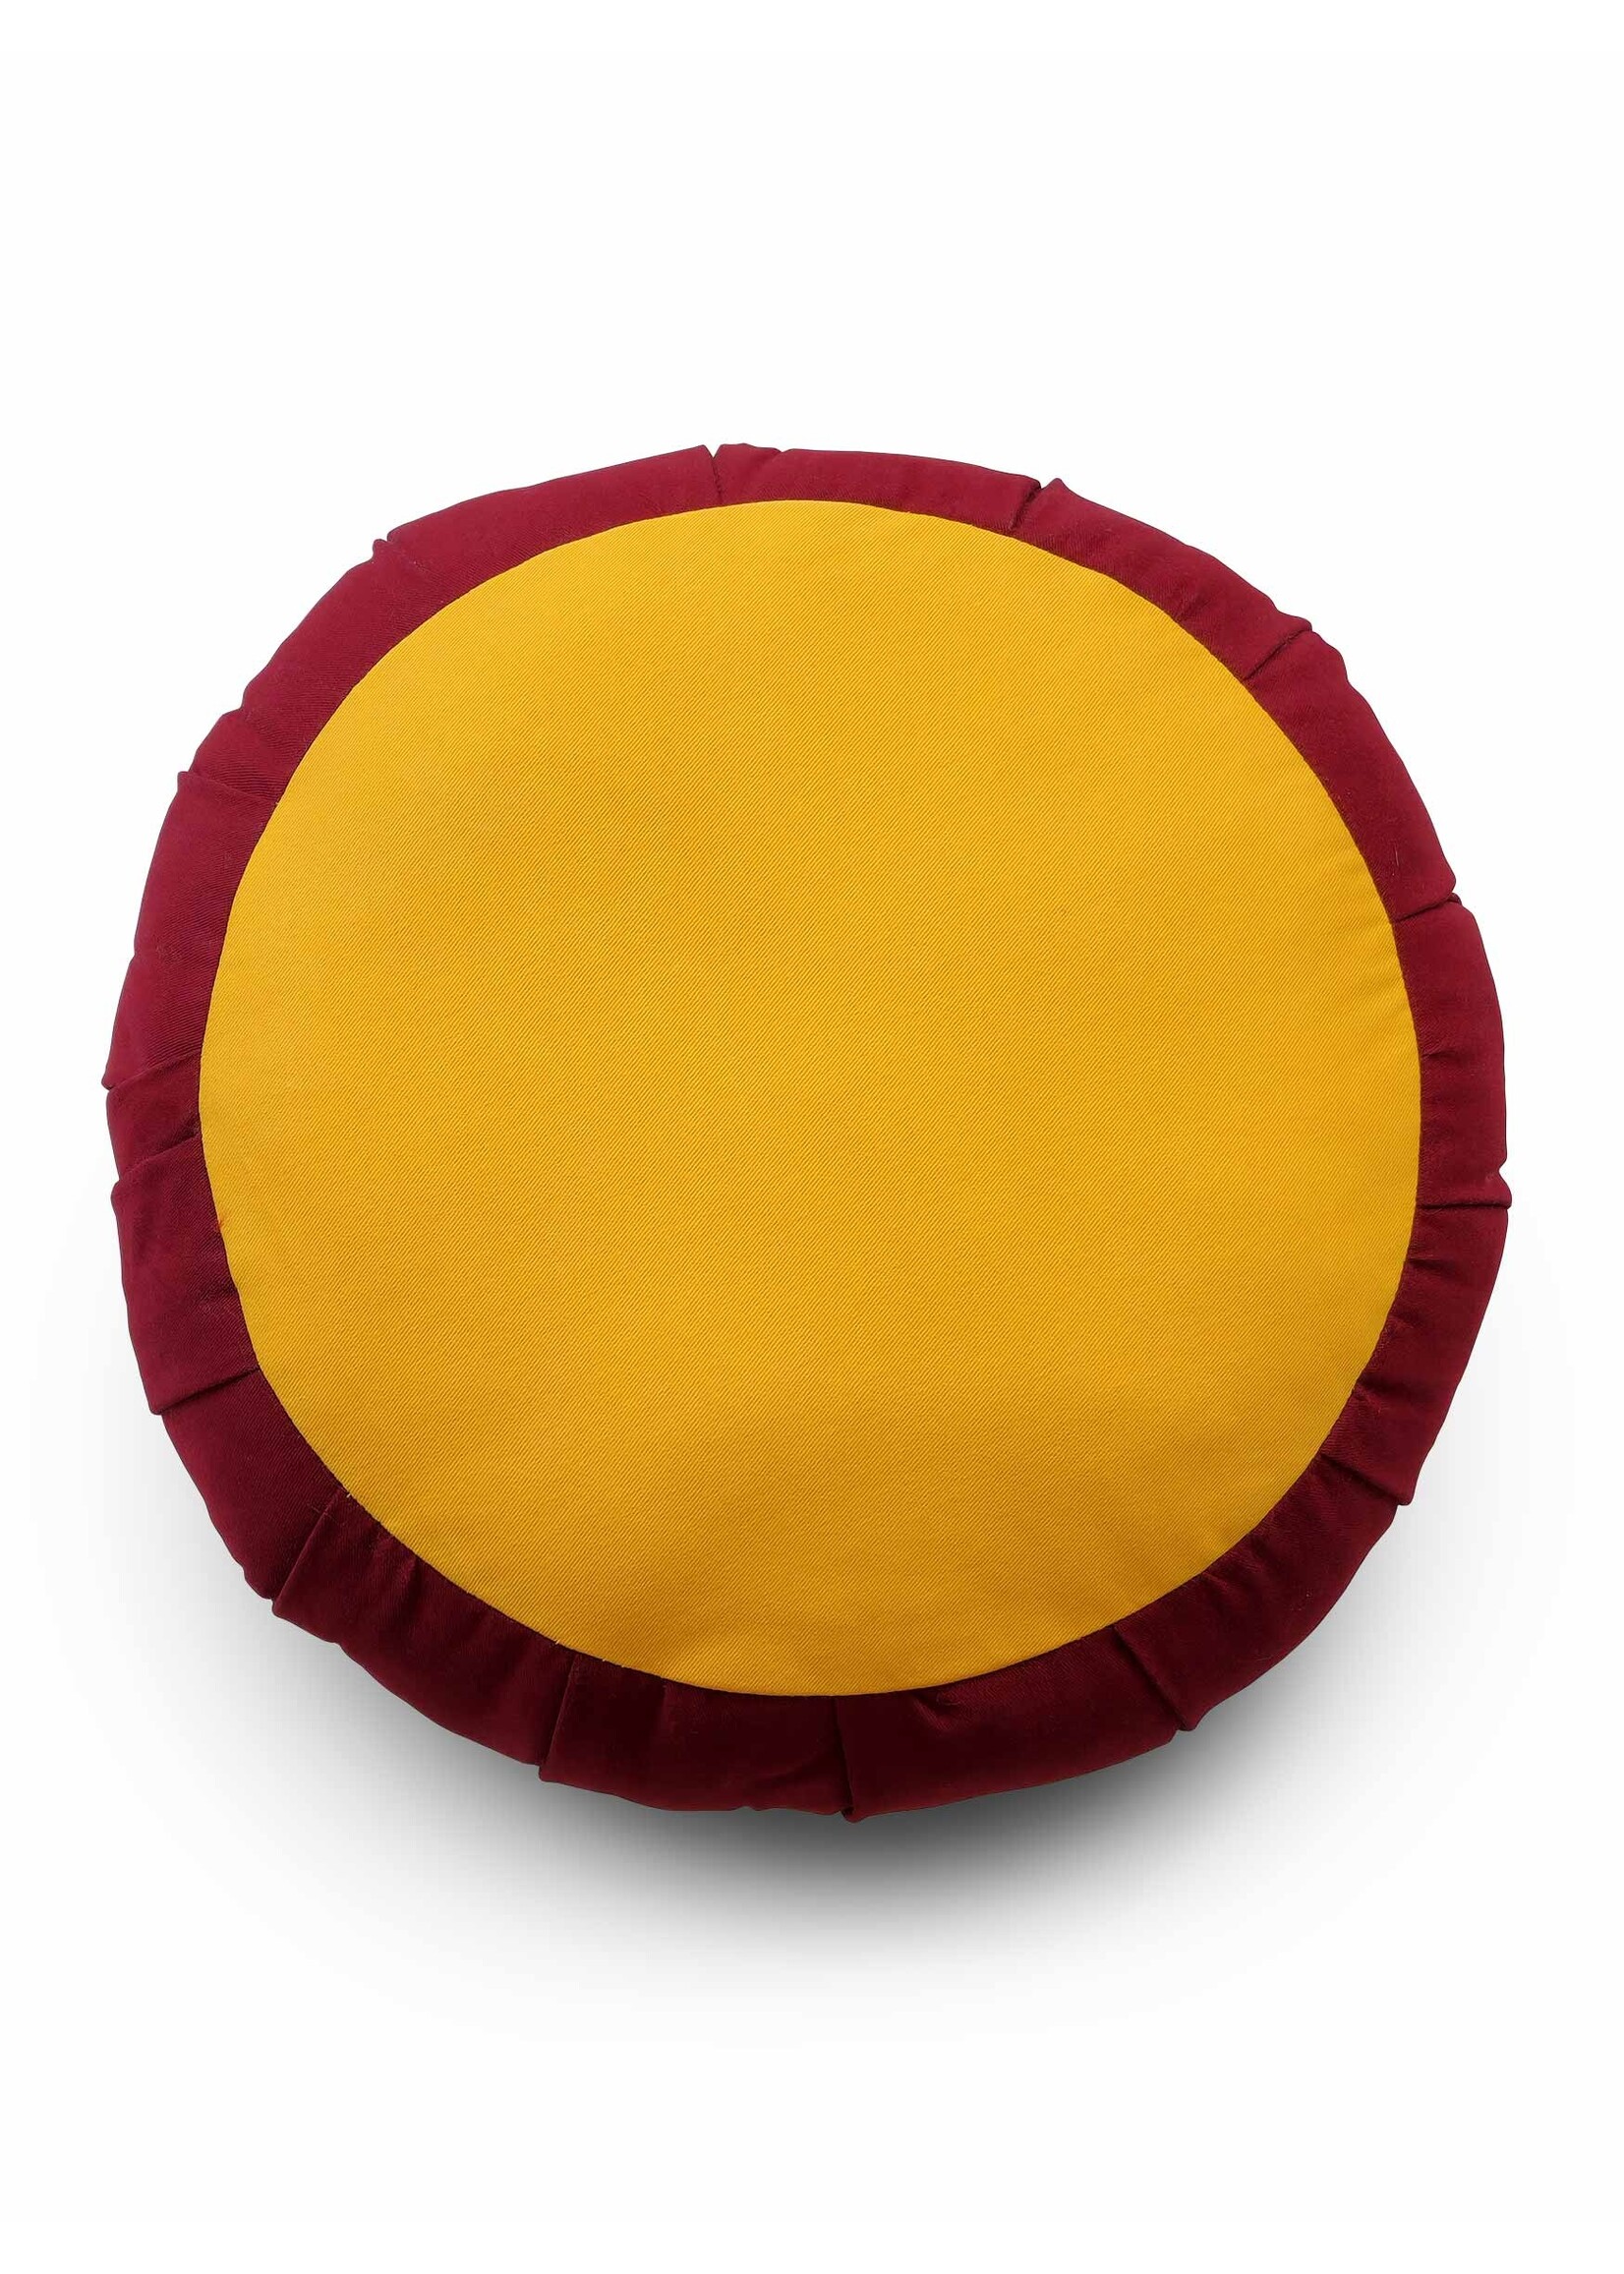 Tibetan Zafu Round Meditation Cushion, Made of Cotton and Filled with Kapok, 28x17cm